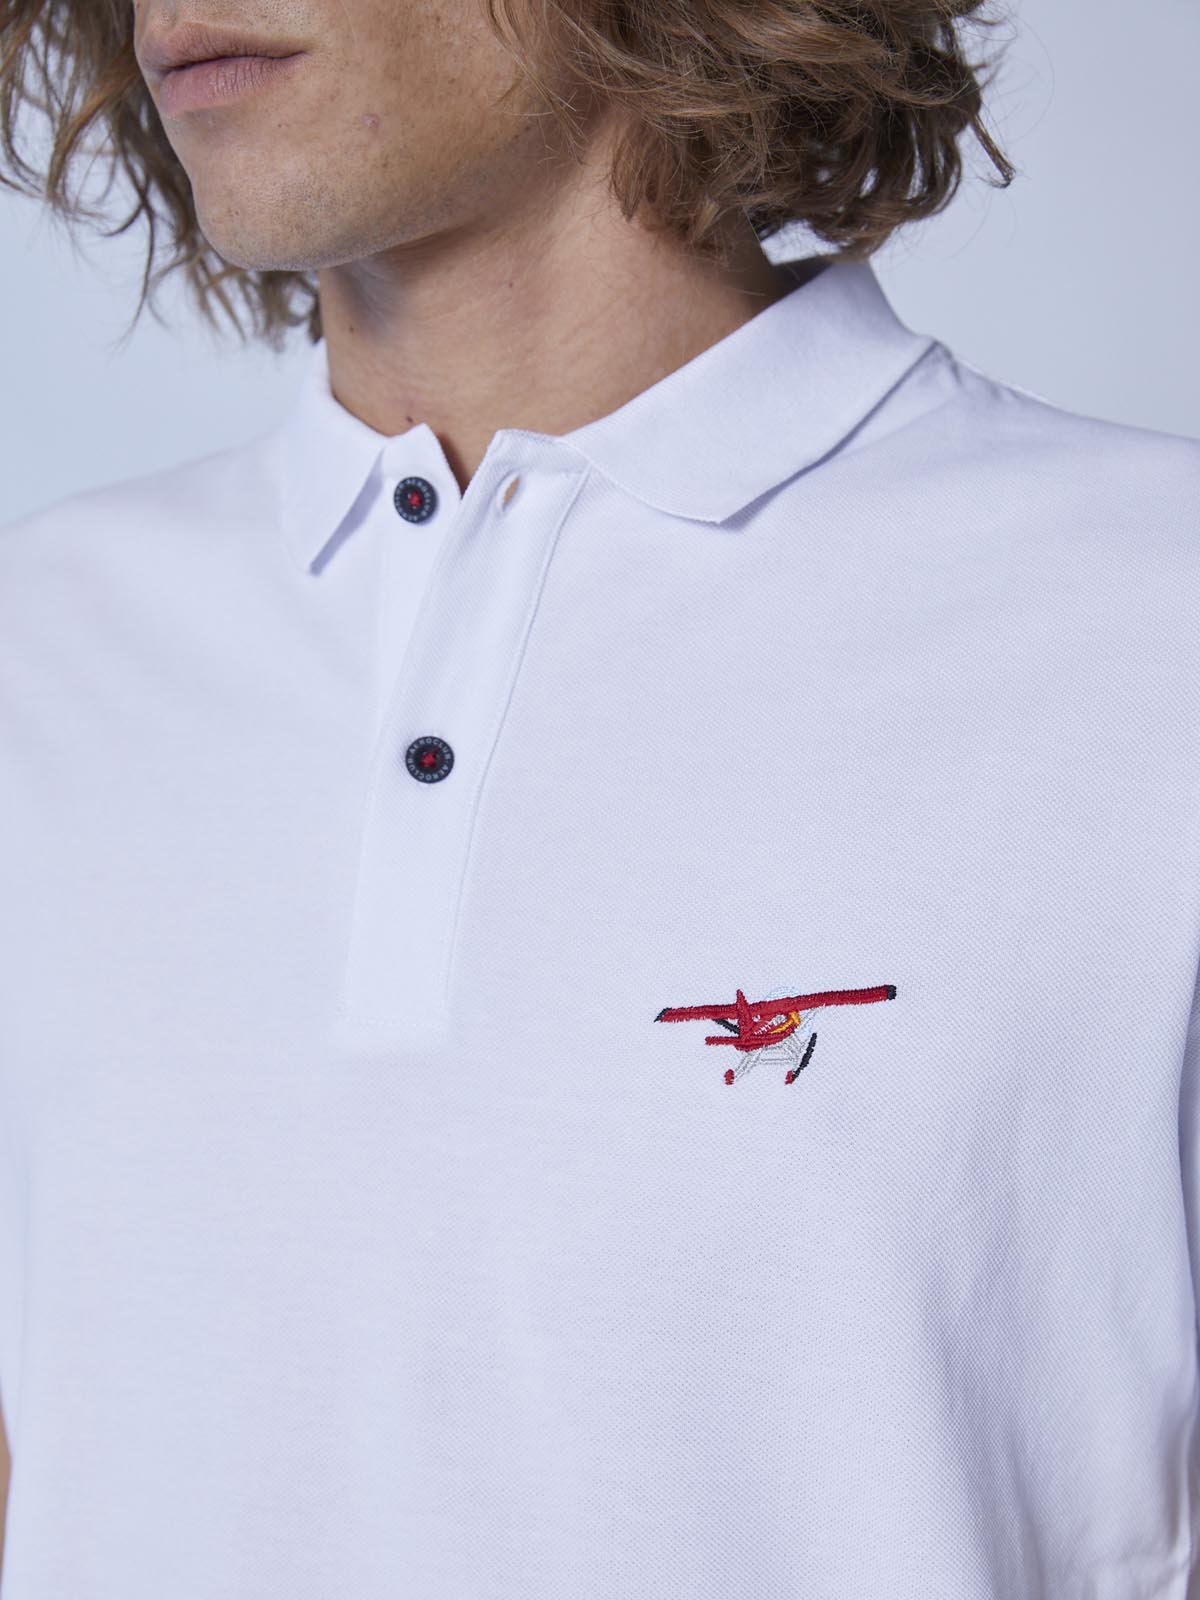 Baran seaplane embroidered Polo shirt